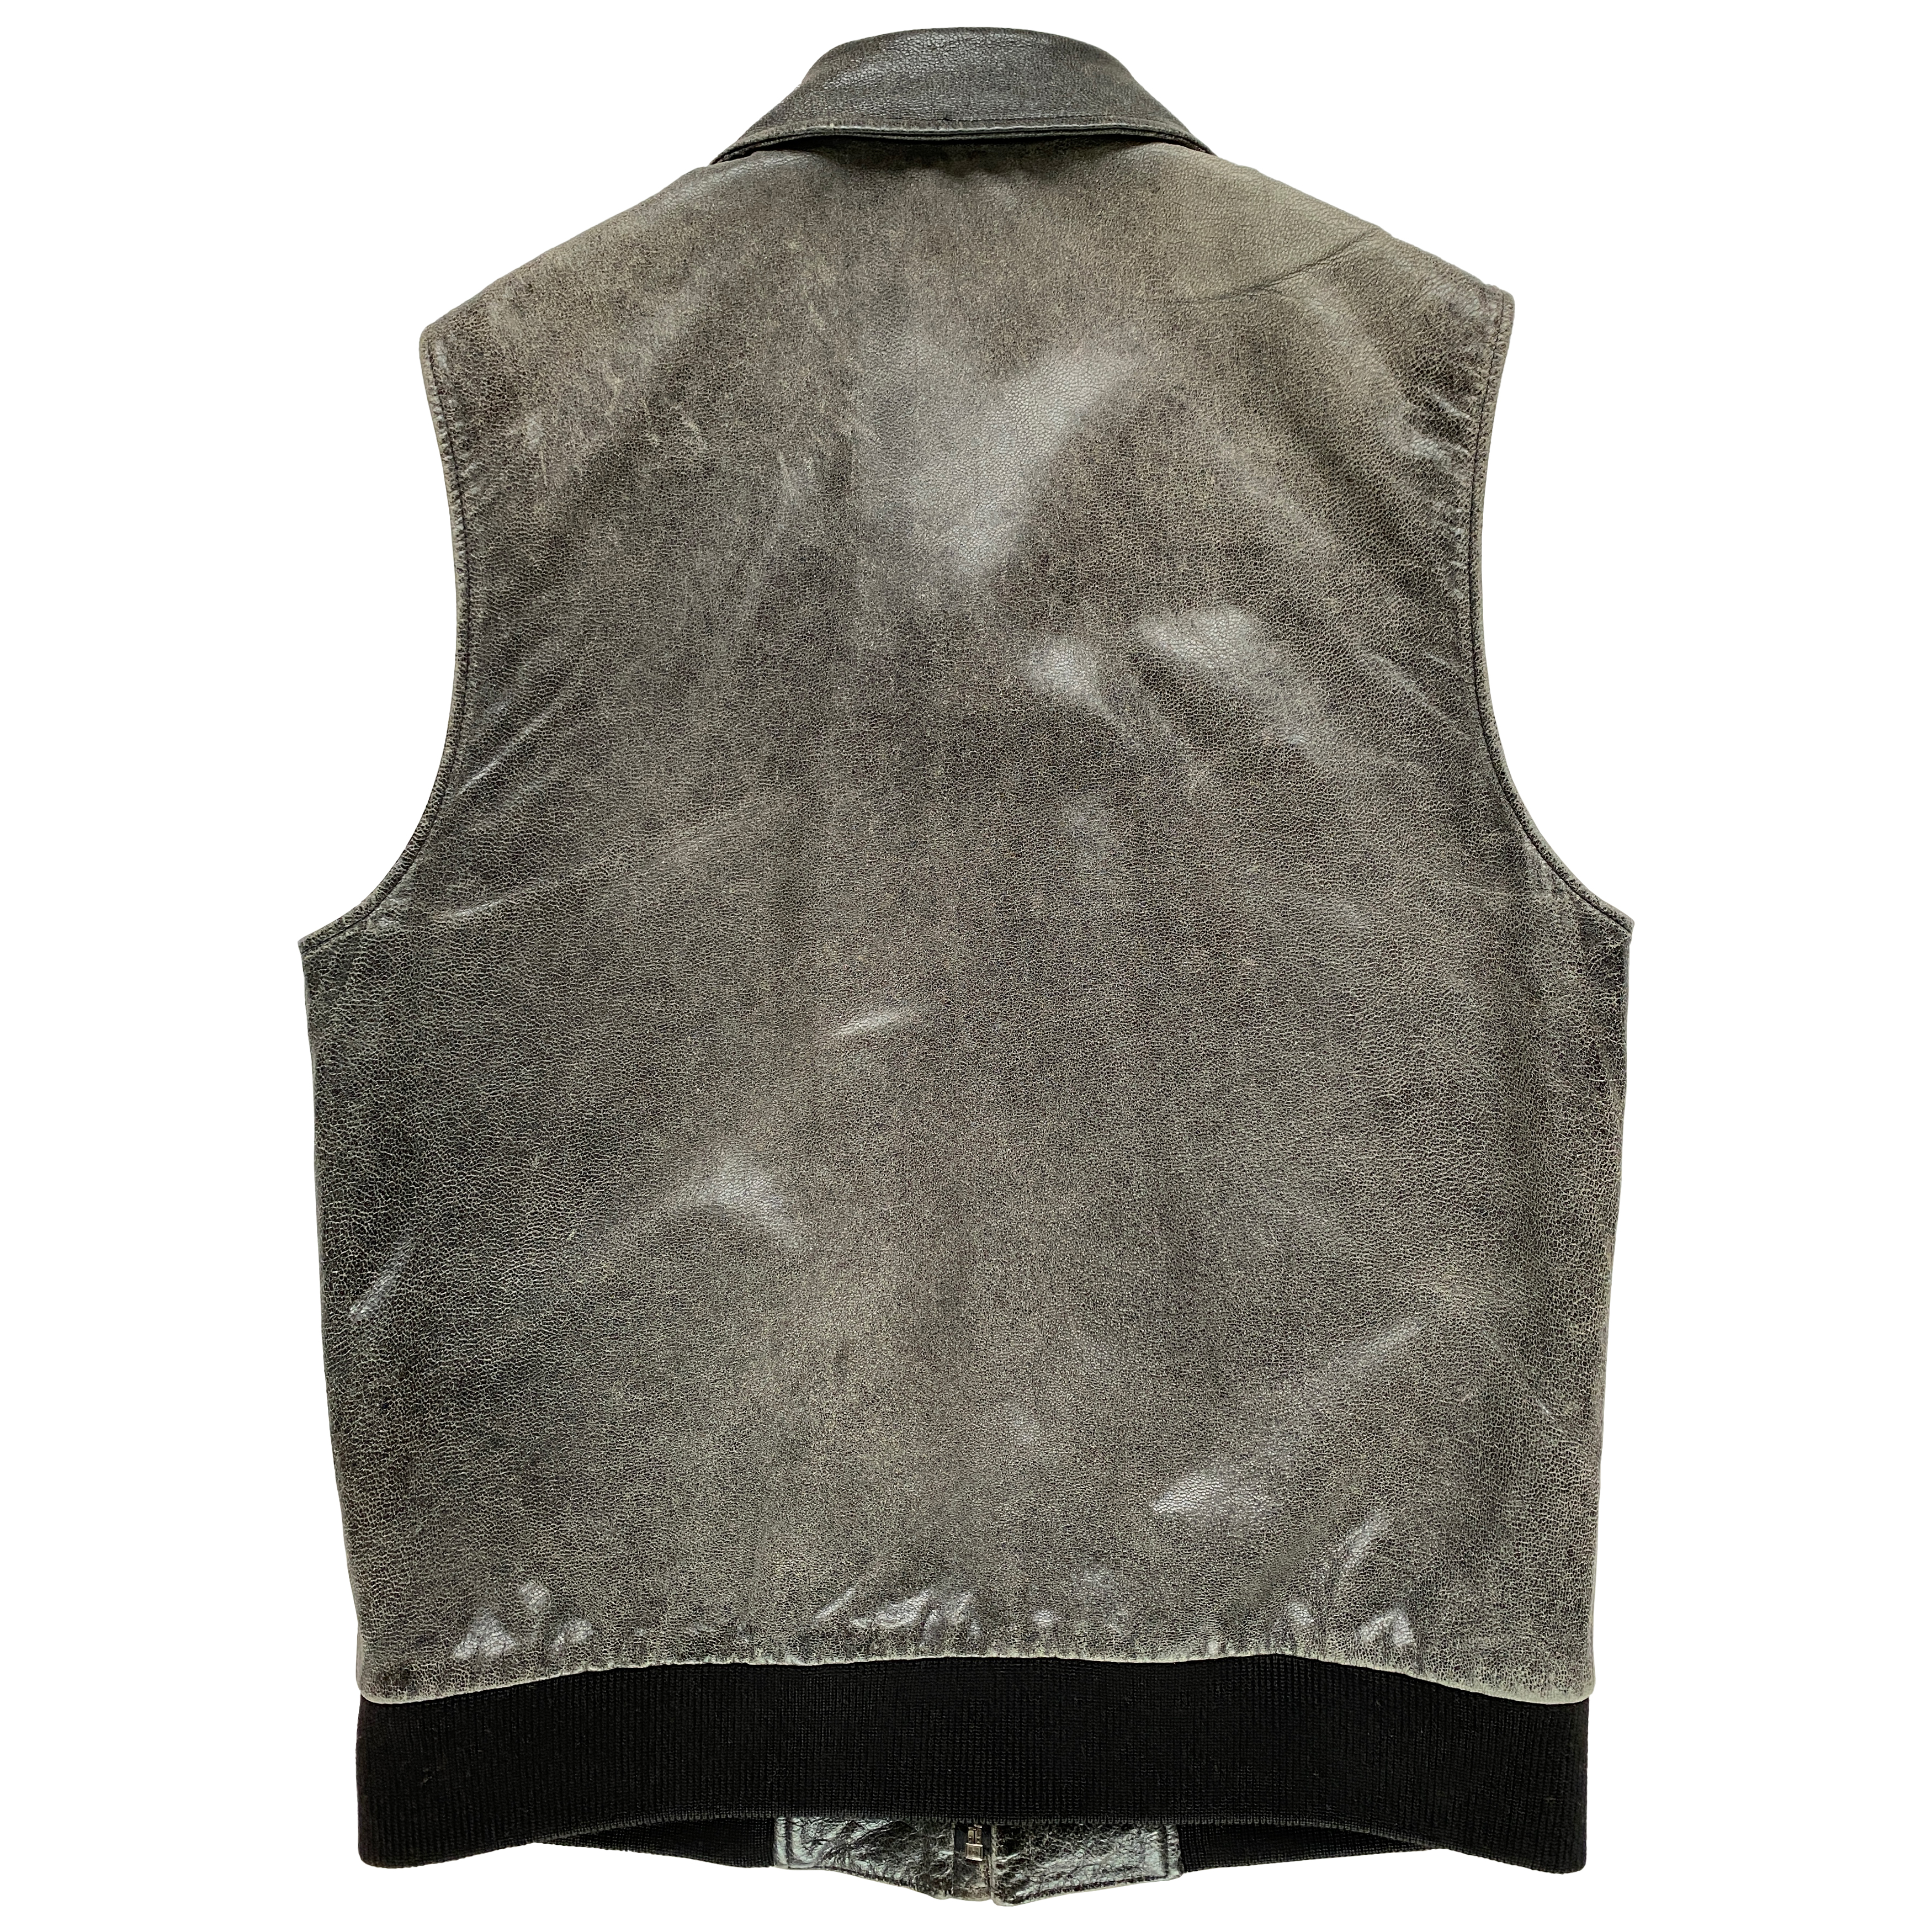 Maison Martin Margiela, A/W 2001-02 Pigskin Leather Zipped Vest